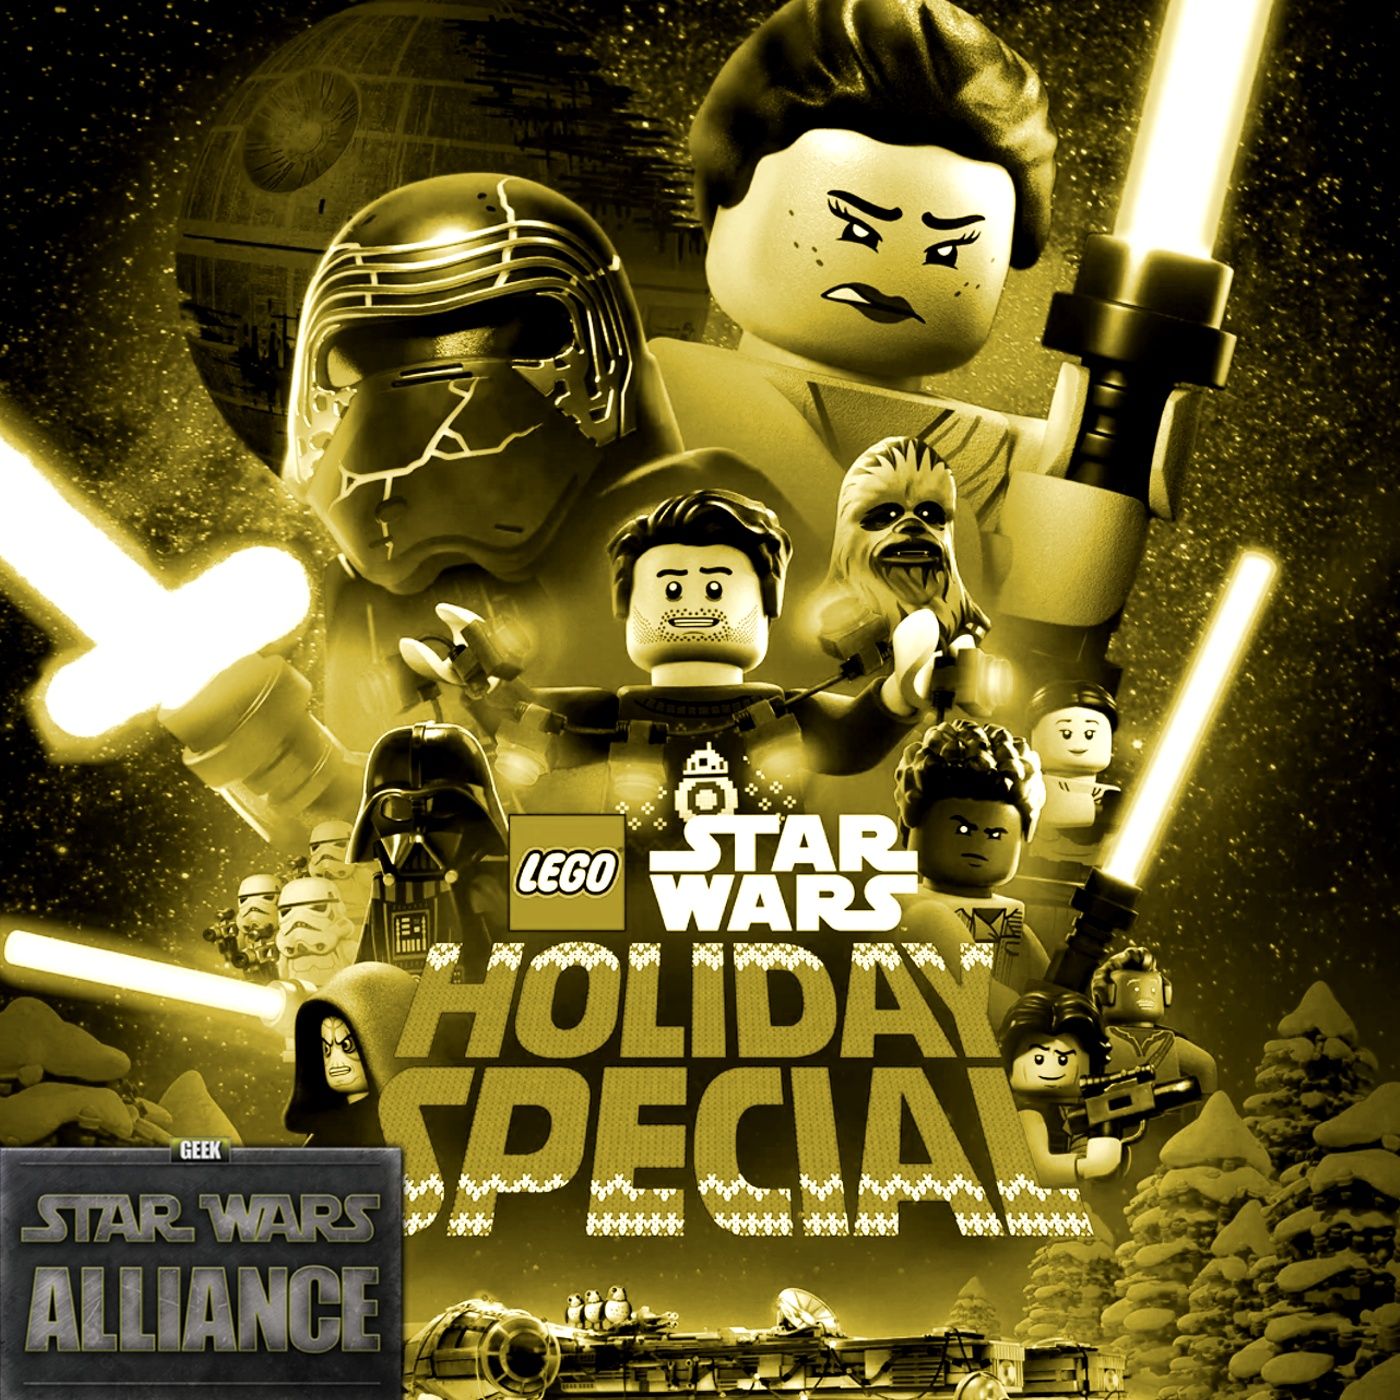 Star Wars Lego Holiday Special Star Wars Alliance CVIII